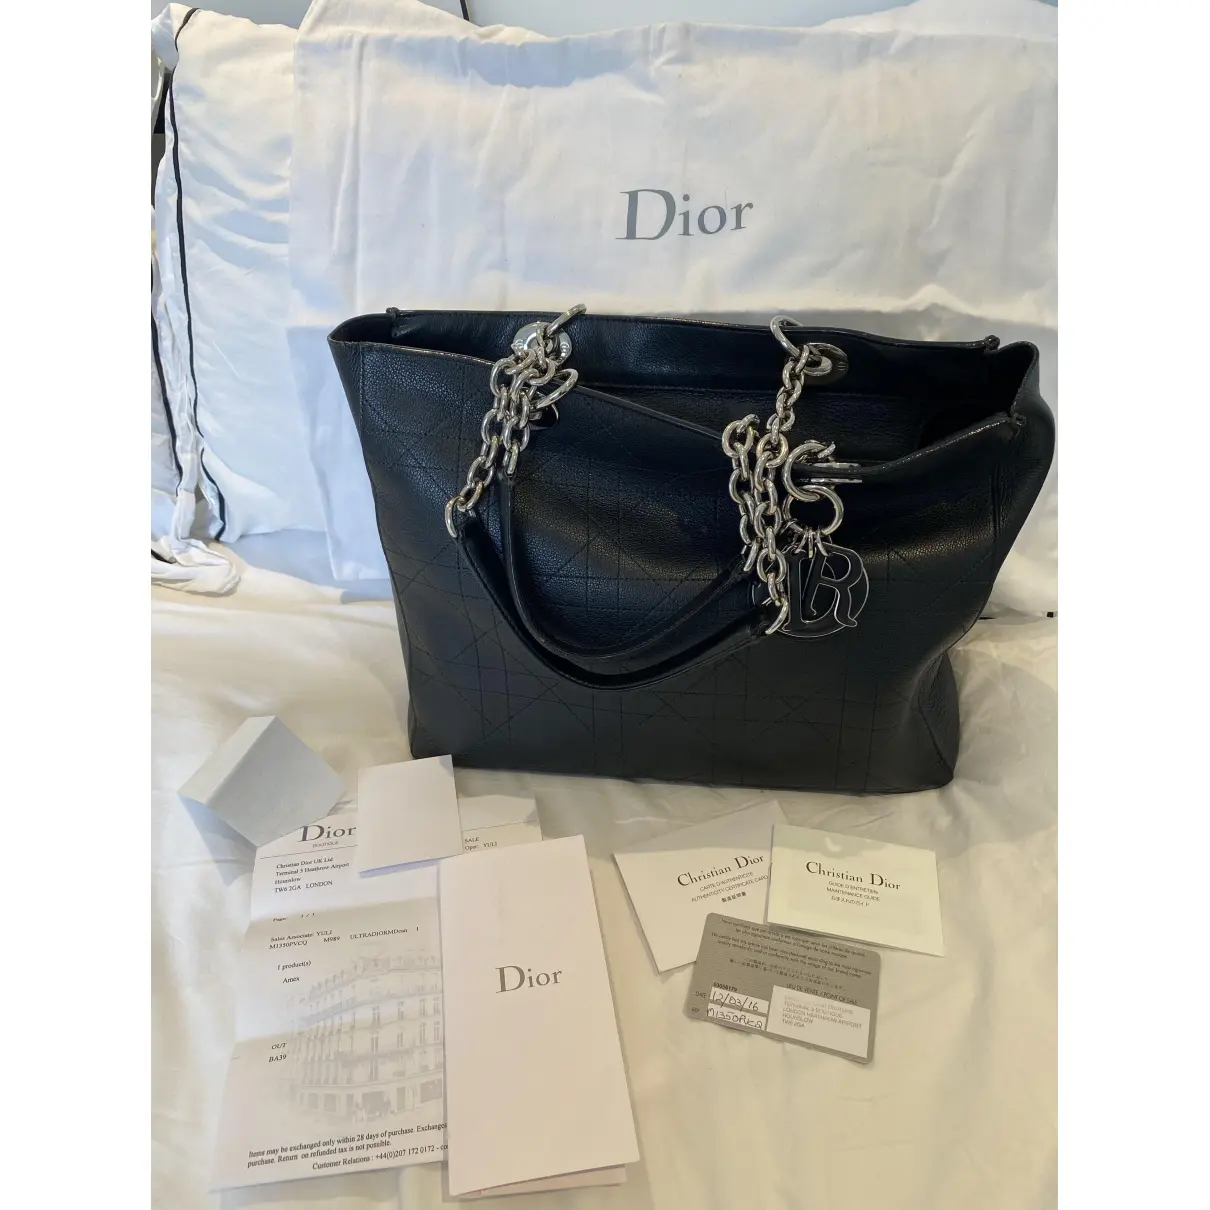 Buy Dior Dior Panarea leather tote online